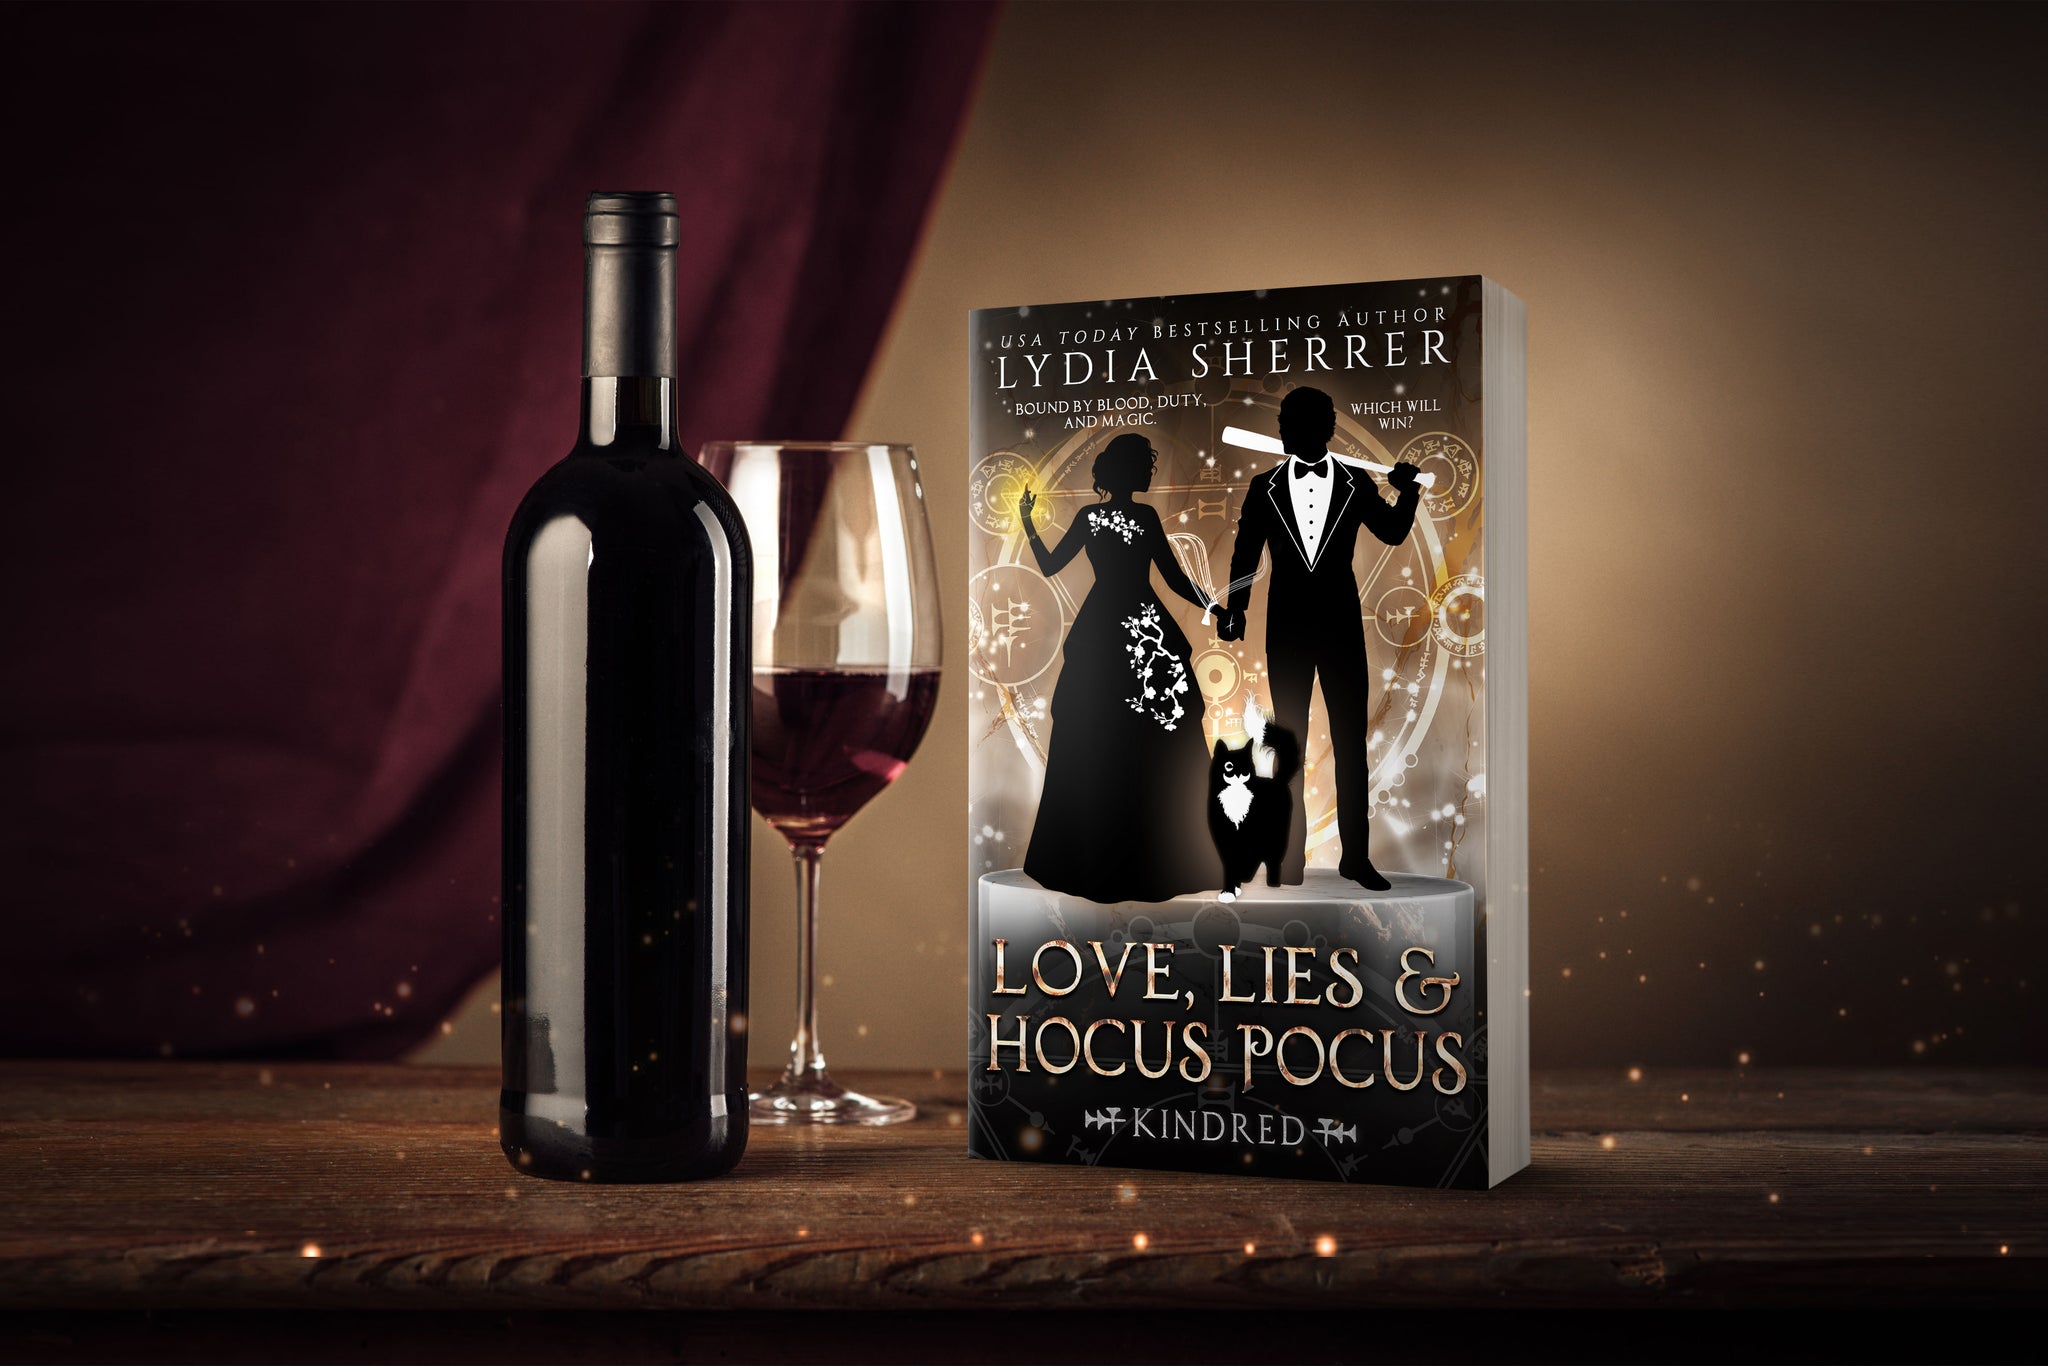 Paperback Book - Love, Lies, and Hocus Pocus: Cat Mischief (A Lily